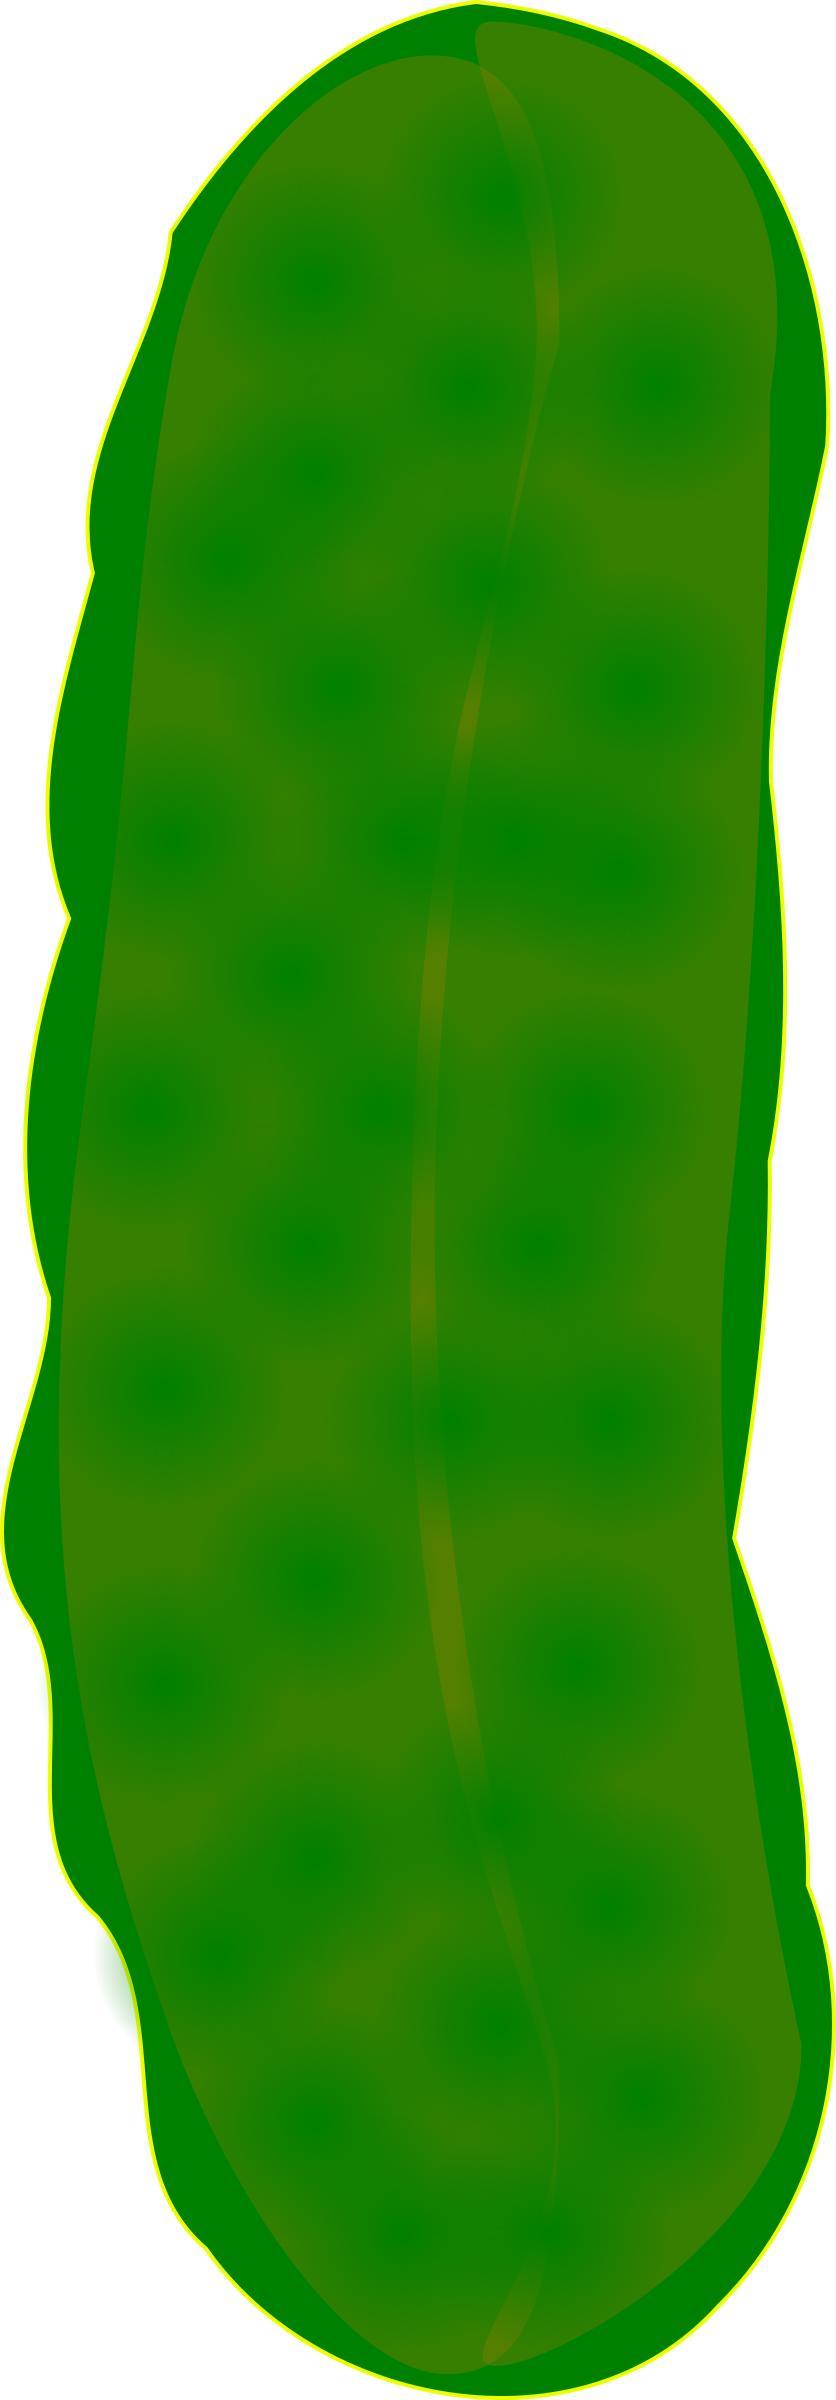 pickle png transparent